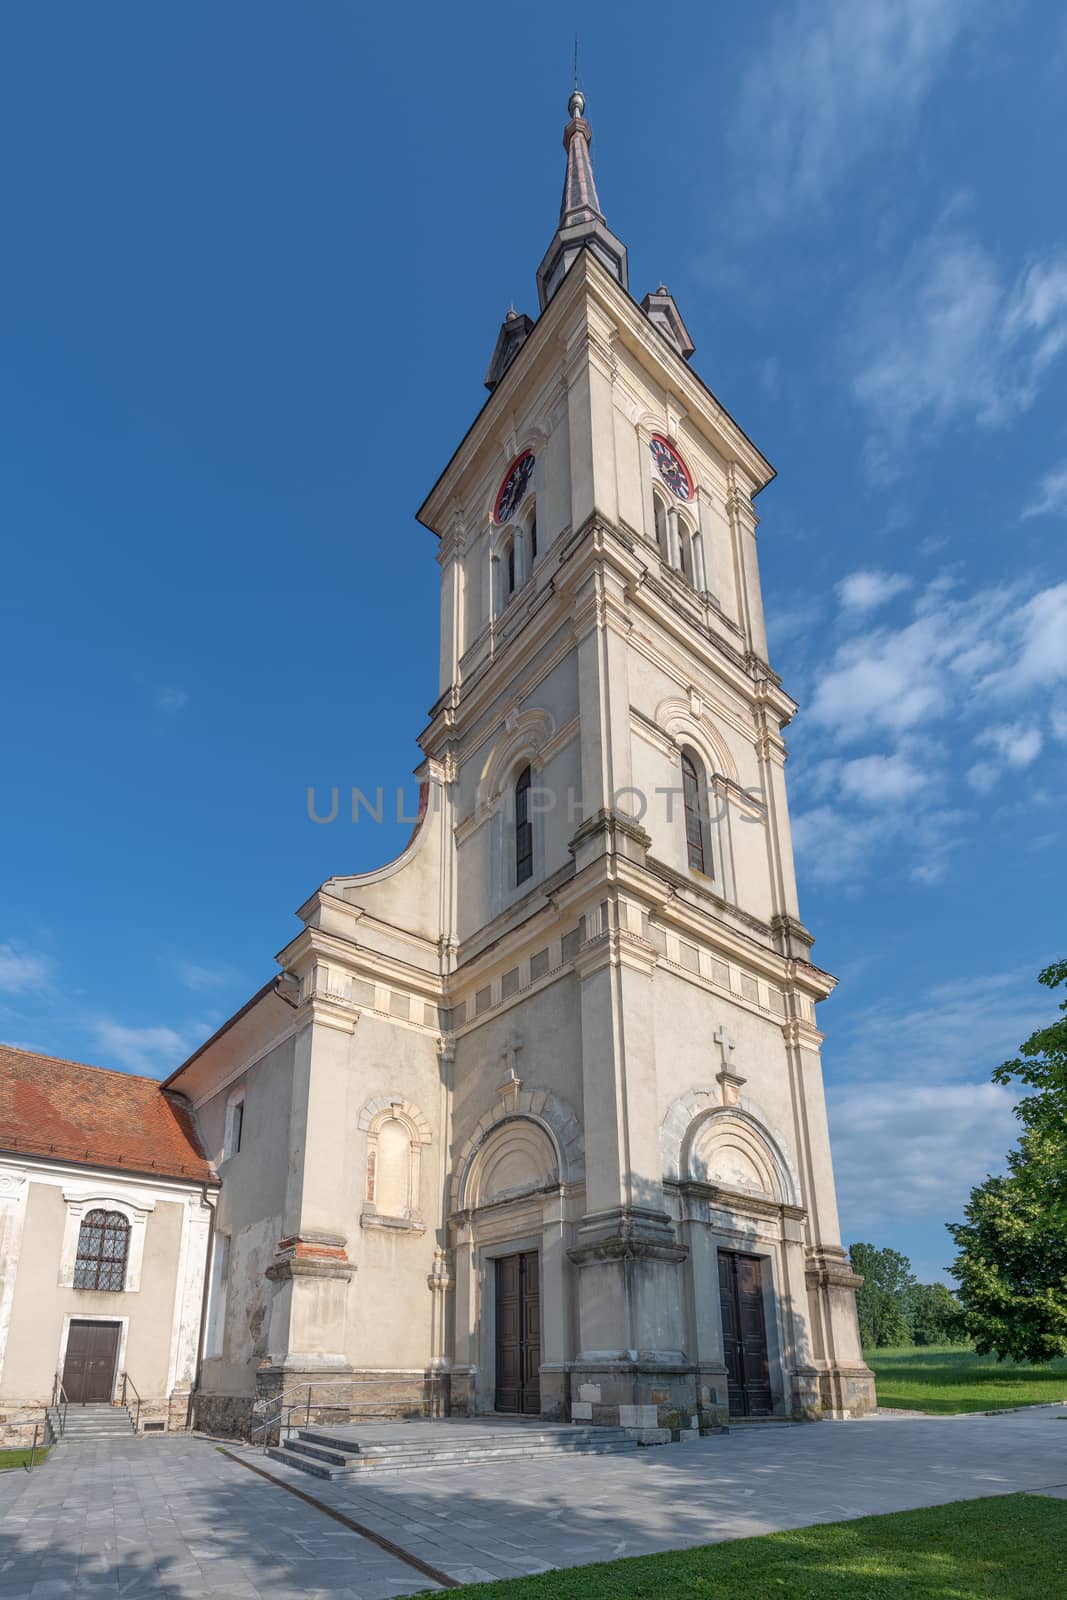 Church tower with clock, St. Bartholomew's church in Slovenska Bistrica, Slovenia